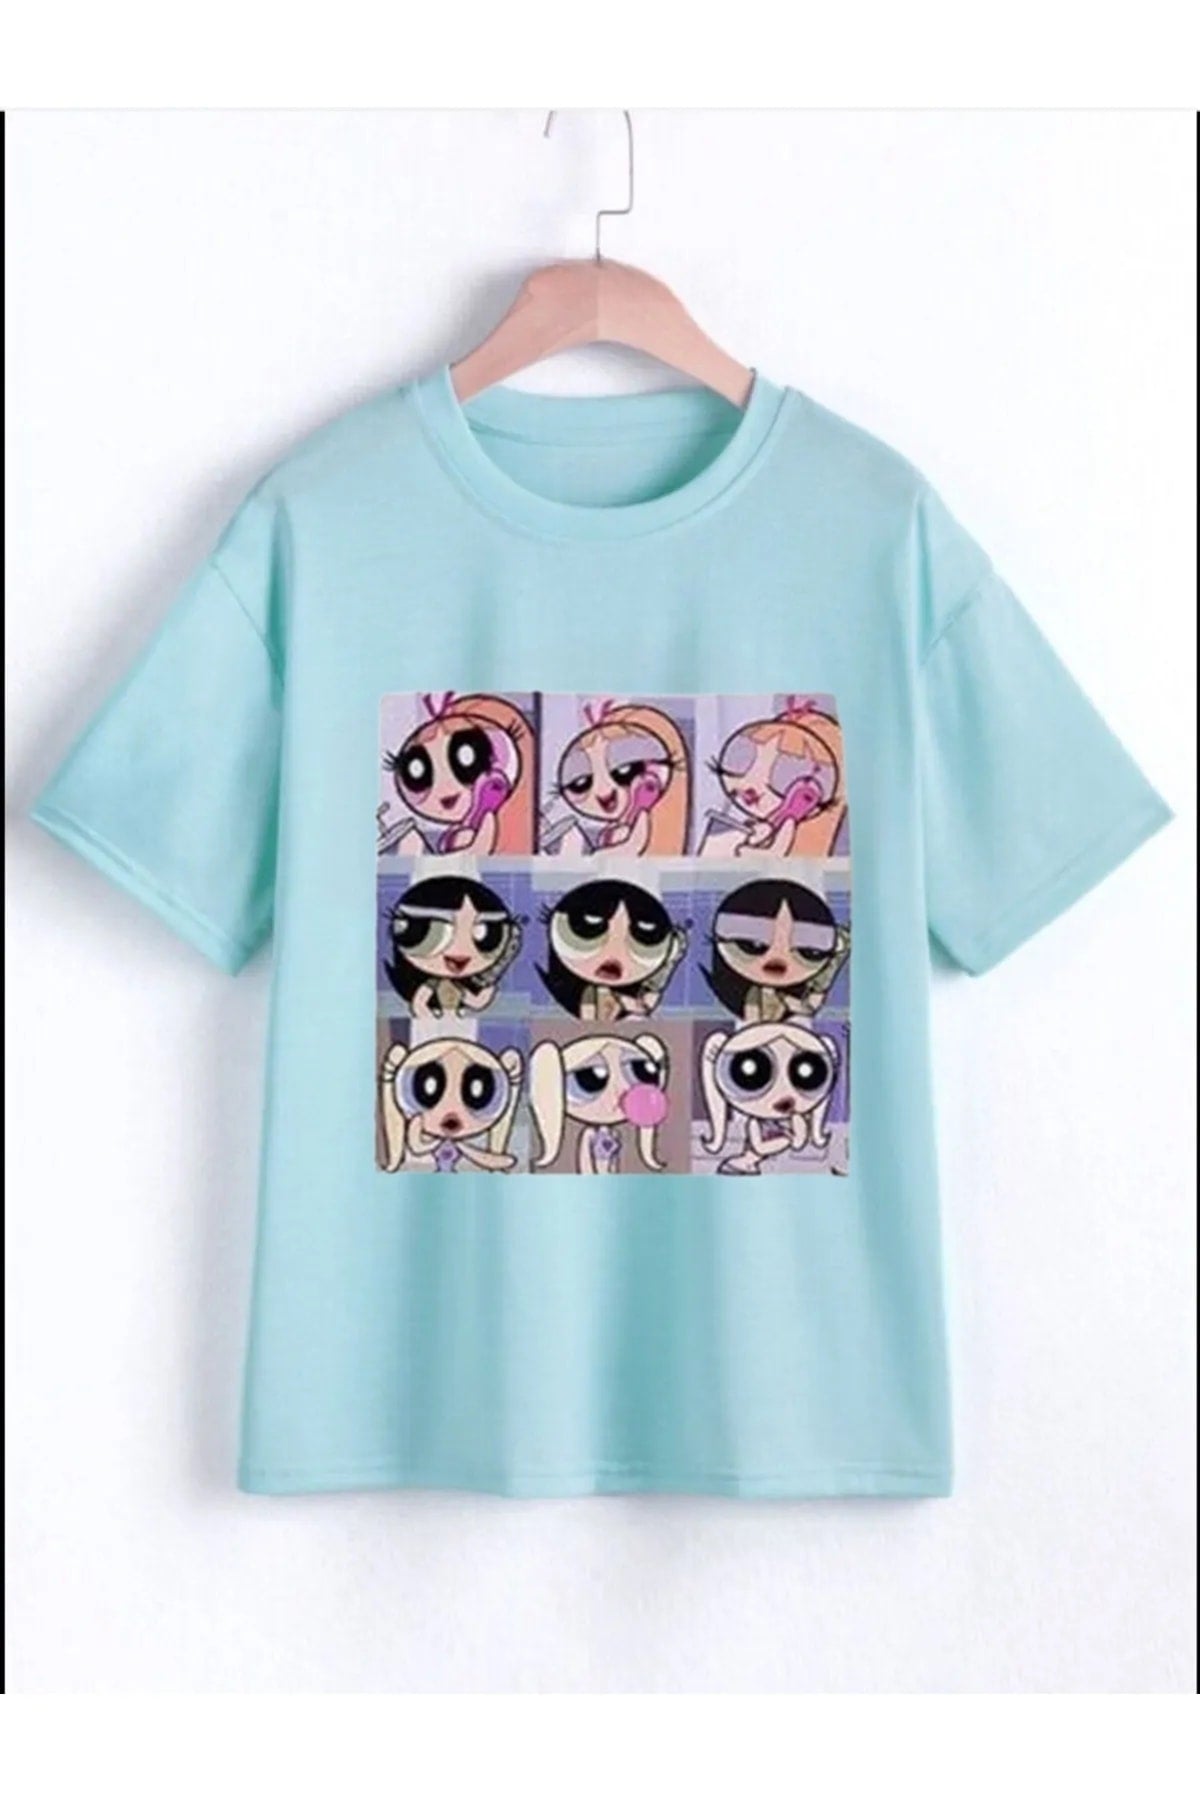 Powergirls Printed Kids T-Shirt